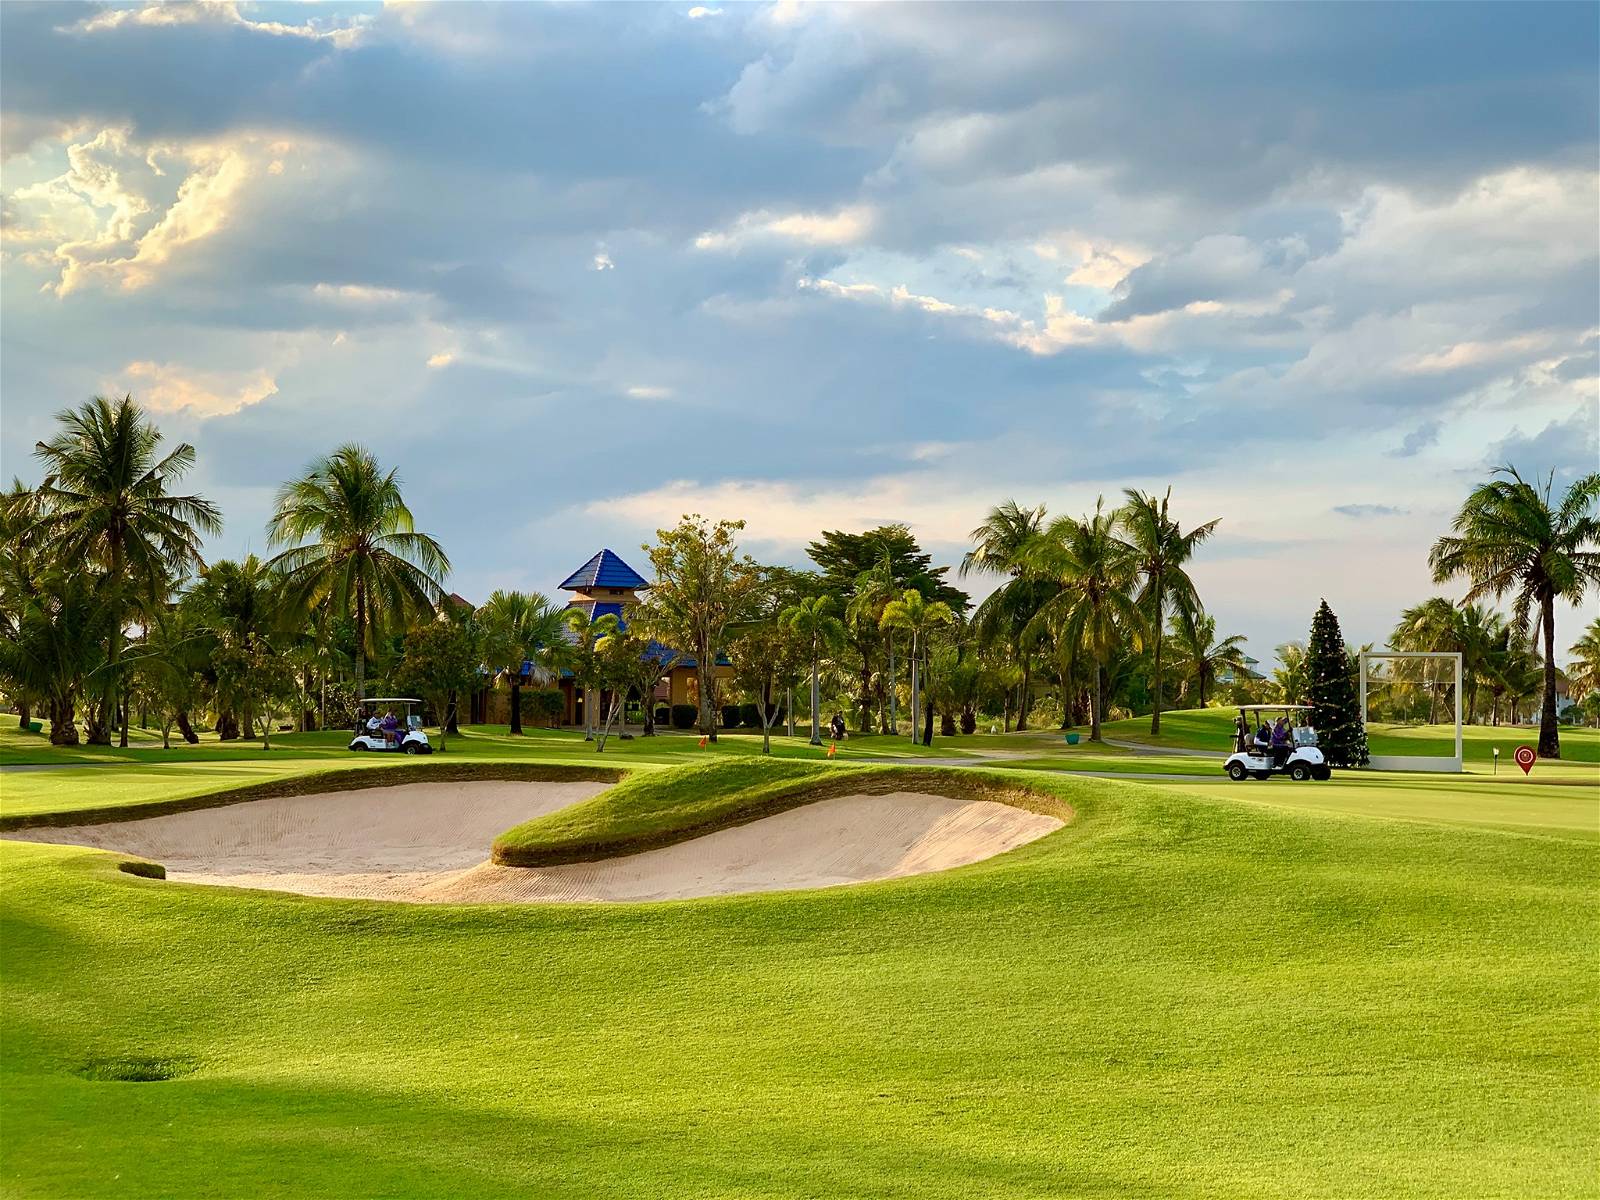 Greenside Bunker, Royal Lakeside Golf Club, Pattaya, Thailand